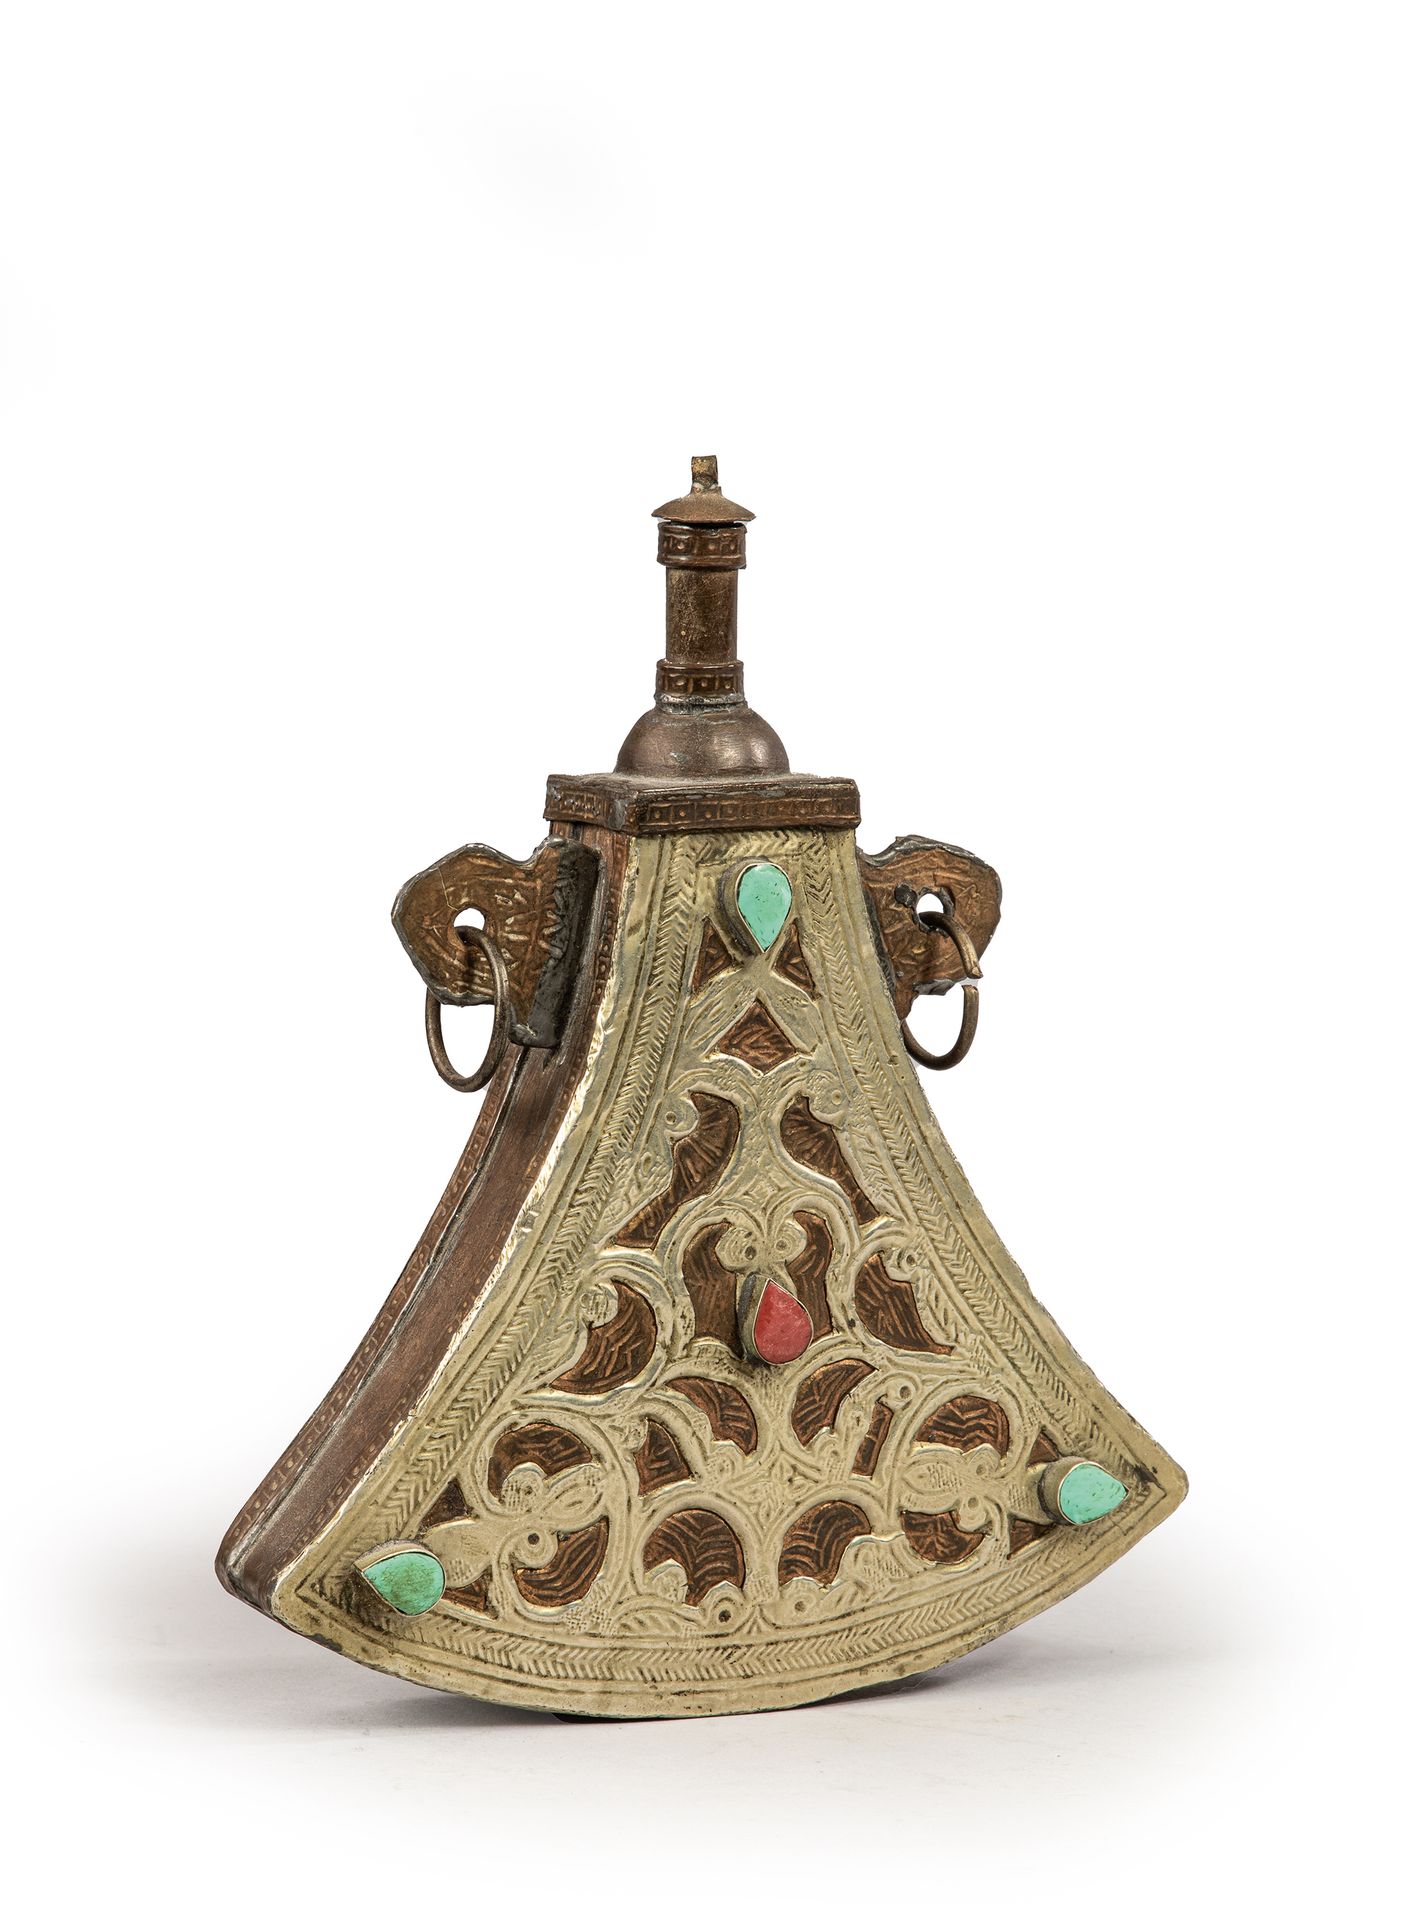 Null 
镶嵌有石头的金属粉壶。

尼泊尔 19世纪末

H.17厘米